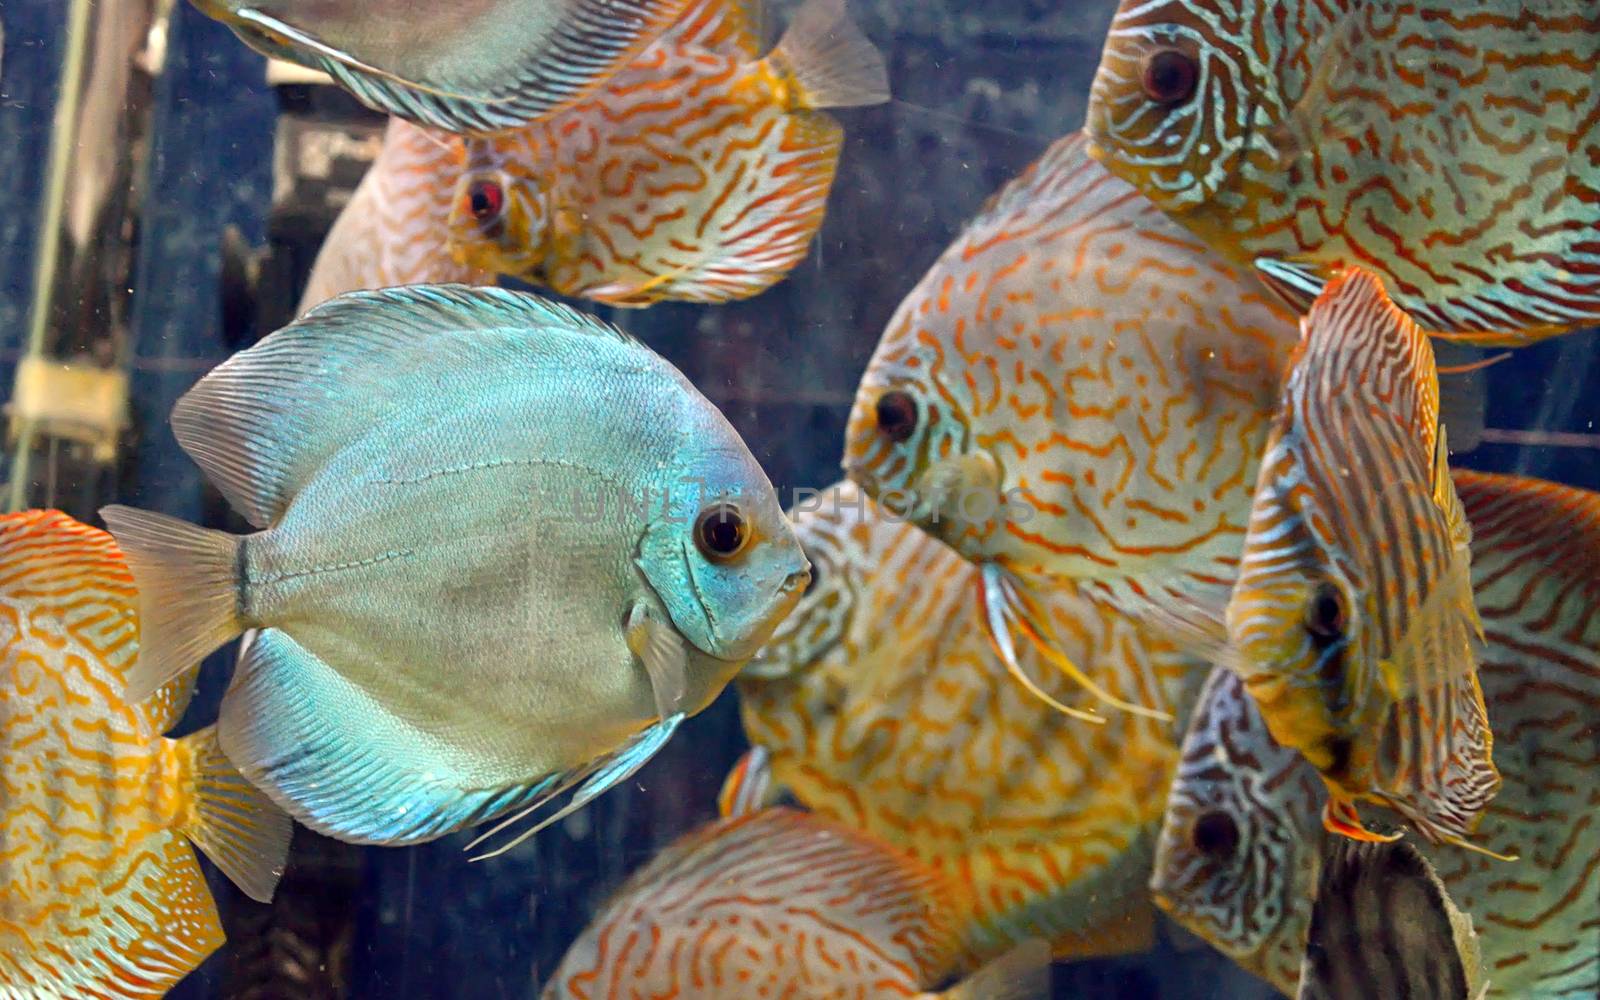 Symphysodon discus fish by jordachelr